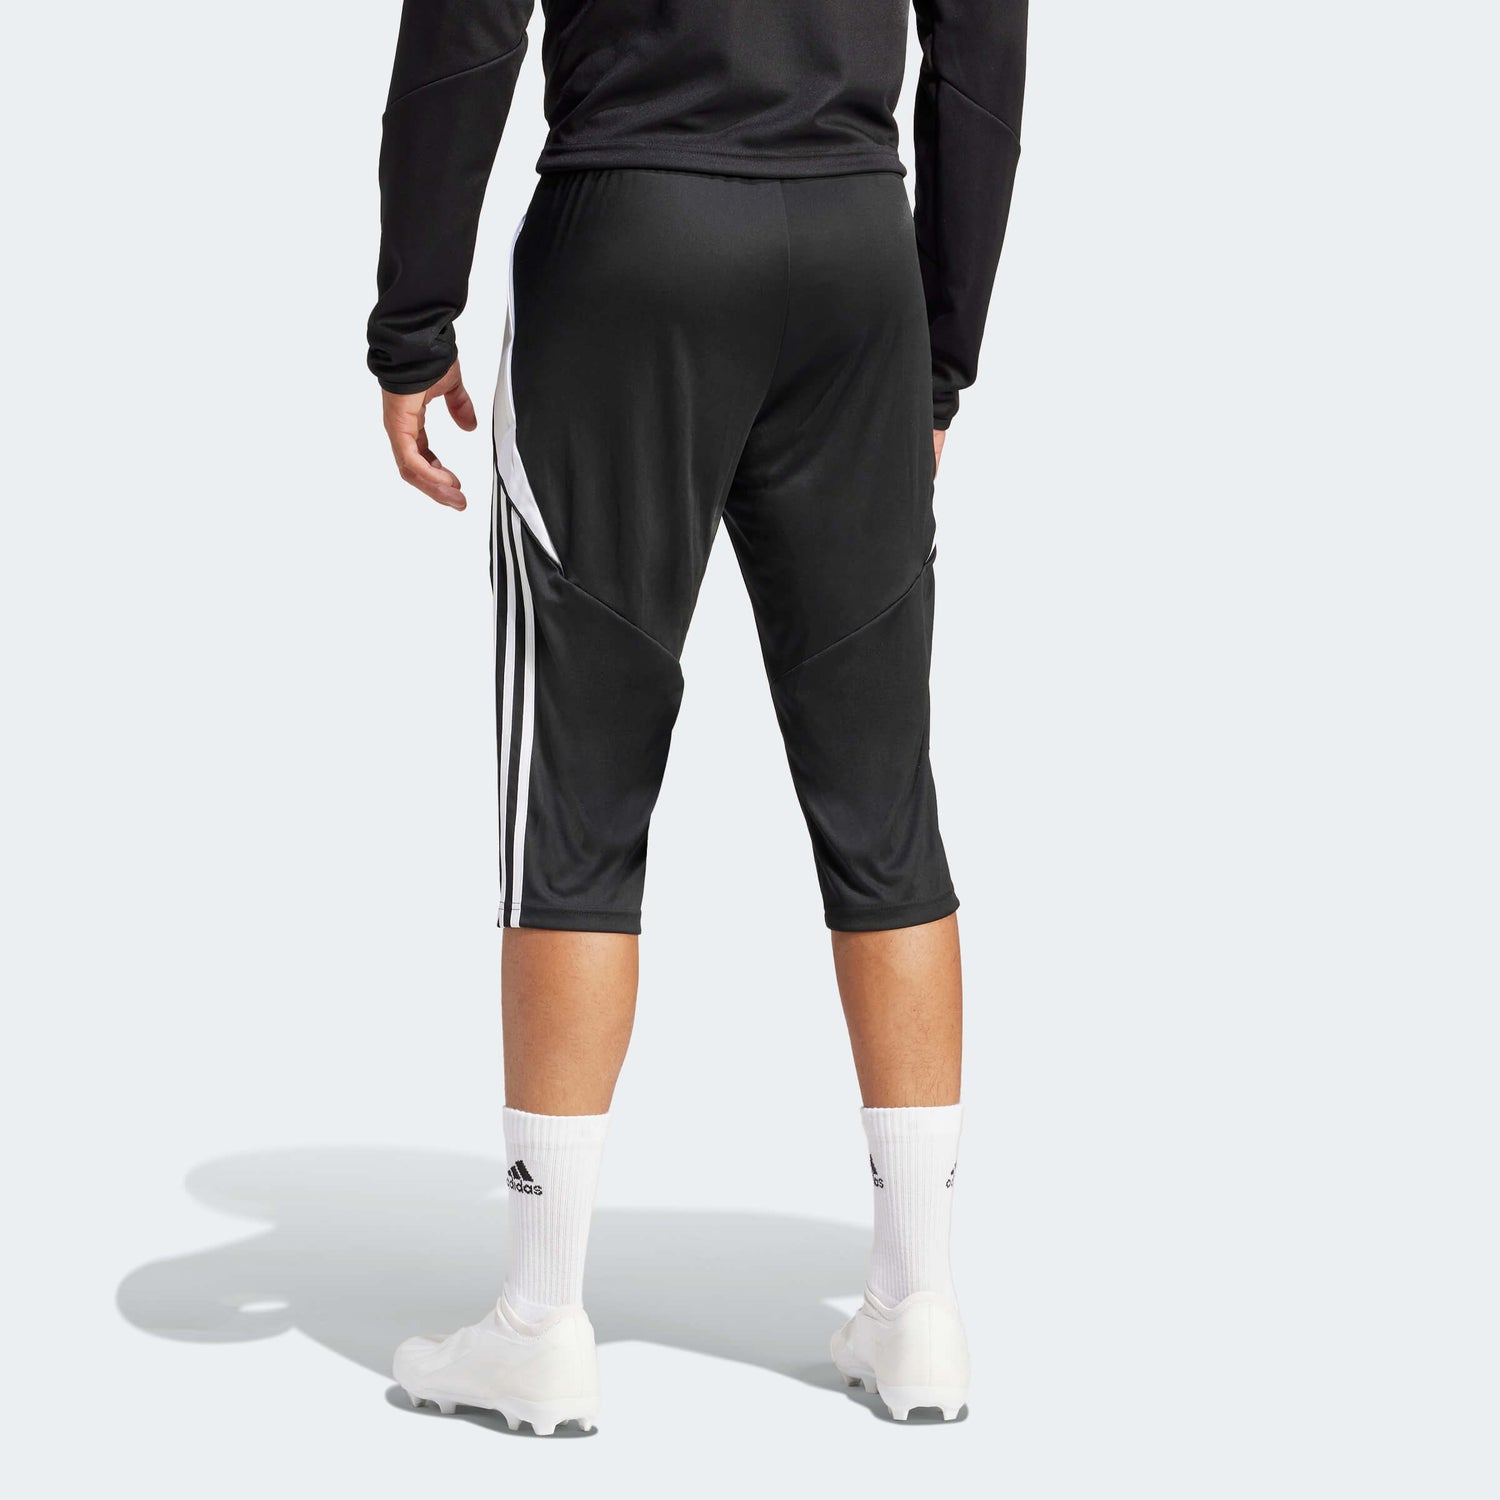 Adidas Training Pants Mens New Tiro 19 Soccer Slim India